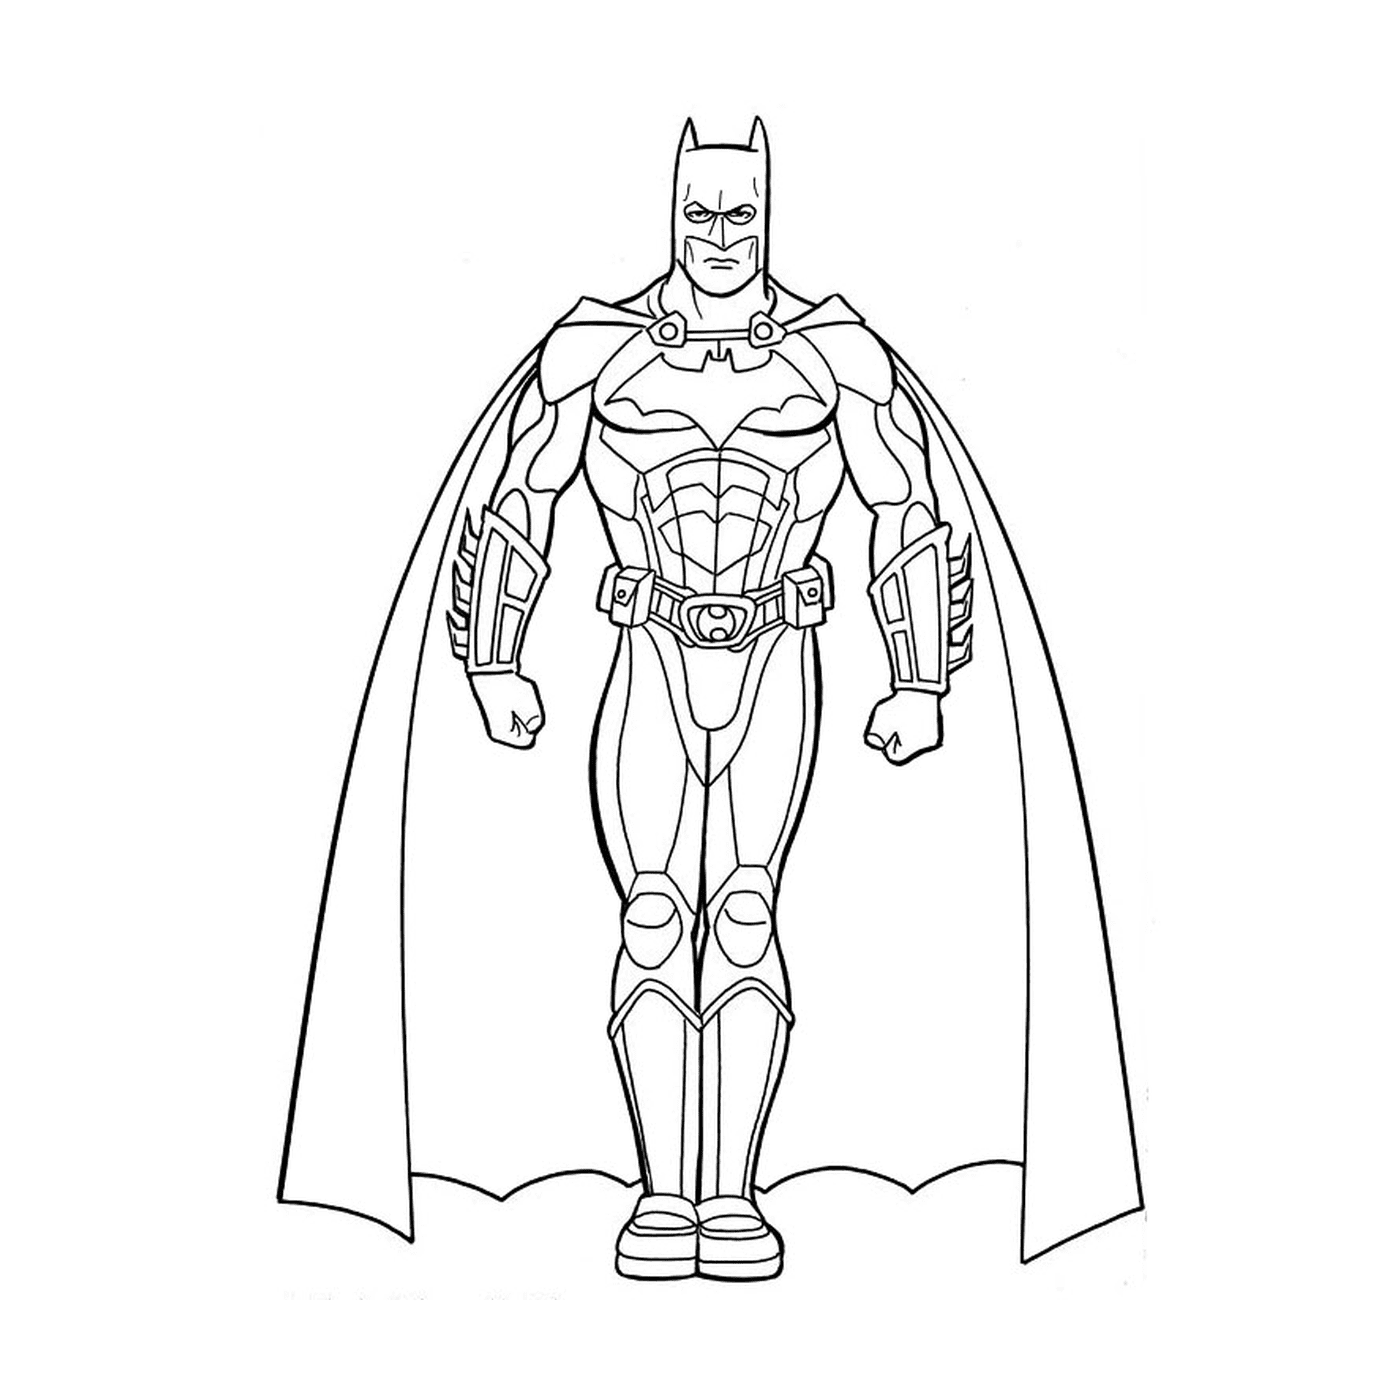   Homme en costume de Batman 